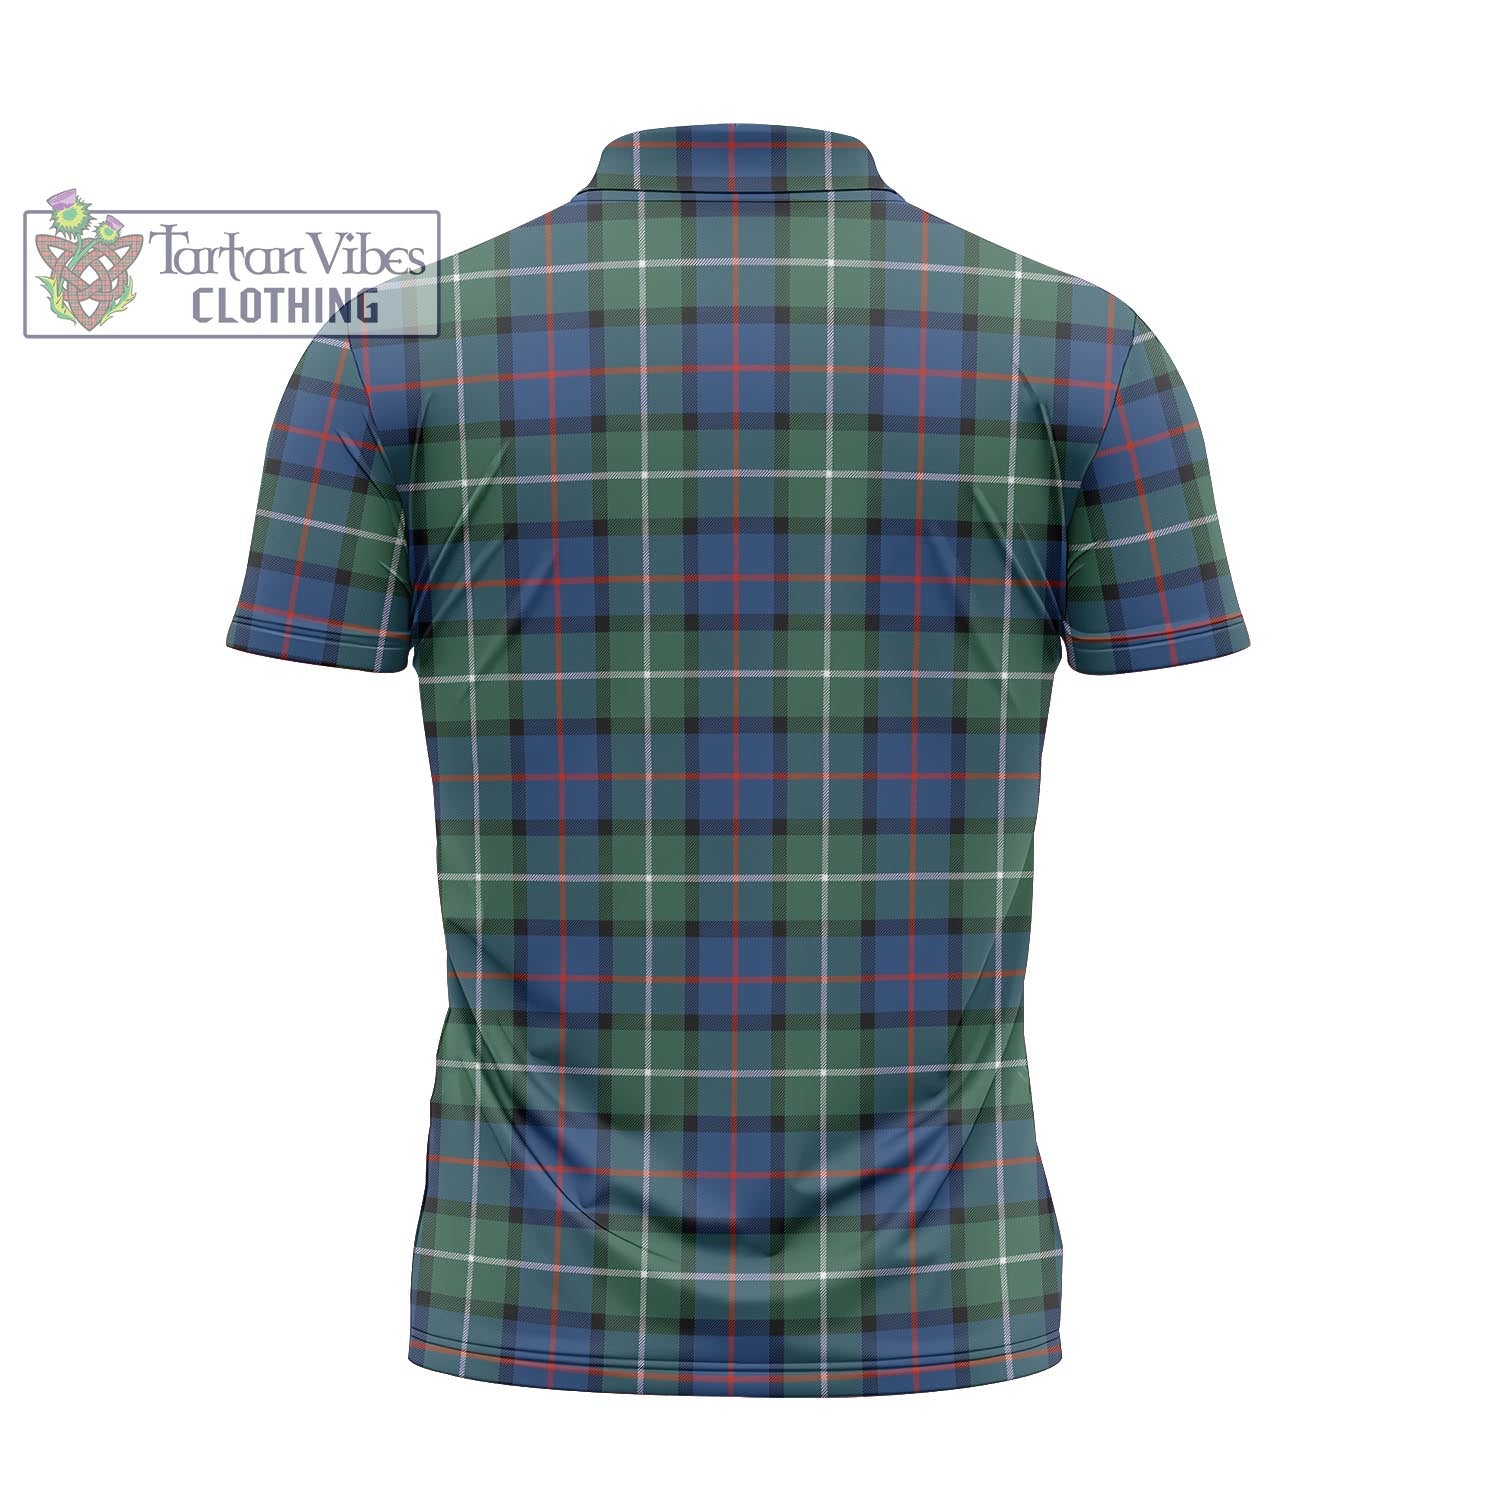 Tartan Vibes Clothing Davidson of Tulloch Tartan Zipper Polo Shirt